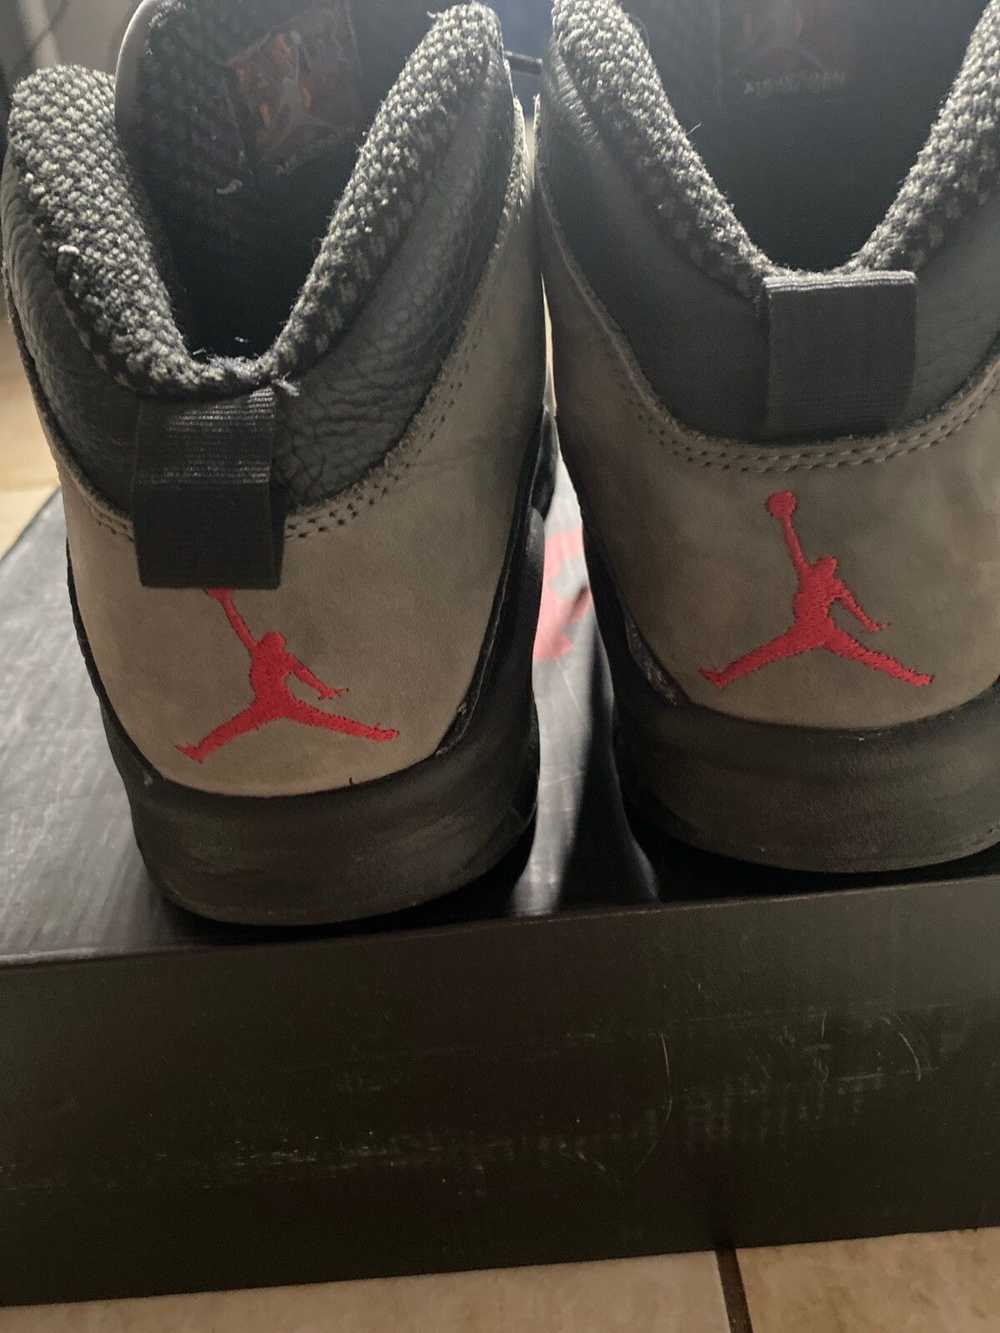 Jordan Brand × Nike 2018 Jordan 9 “Shadow” - image 4